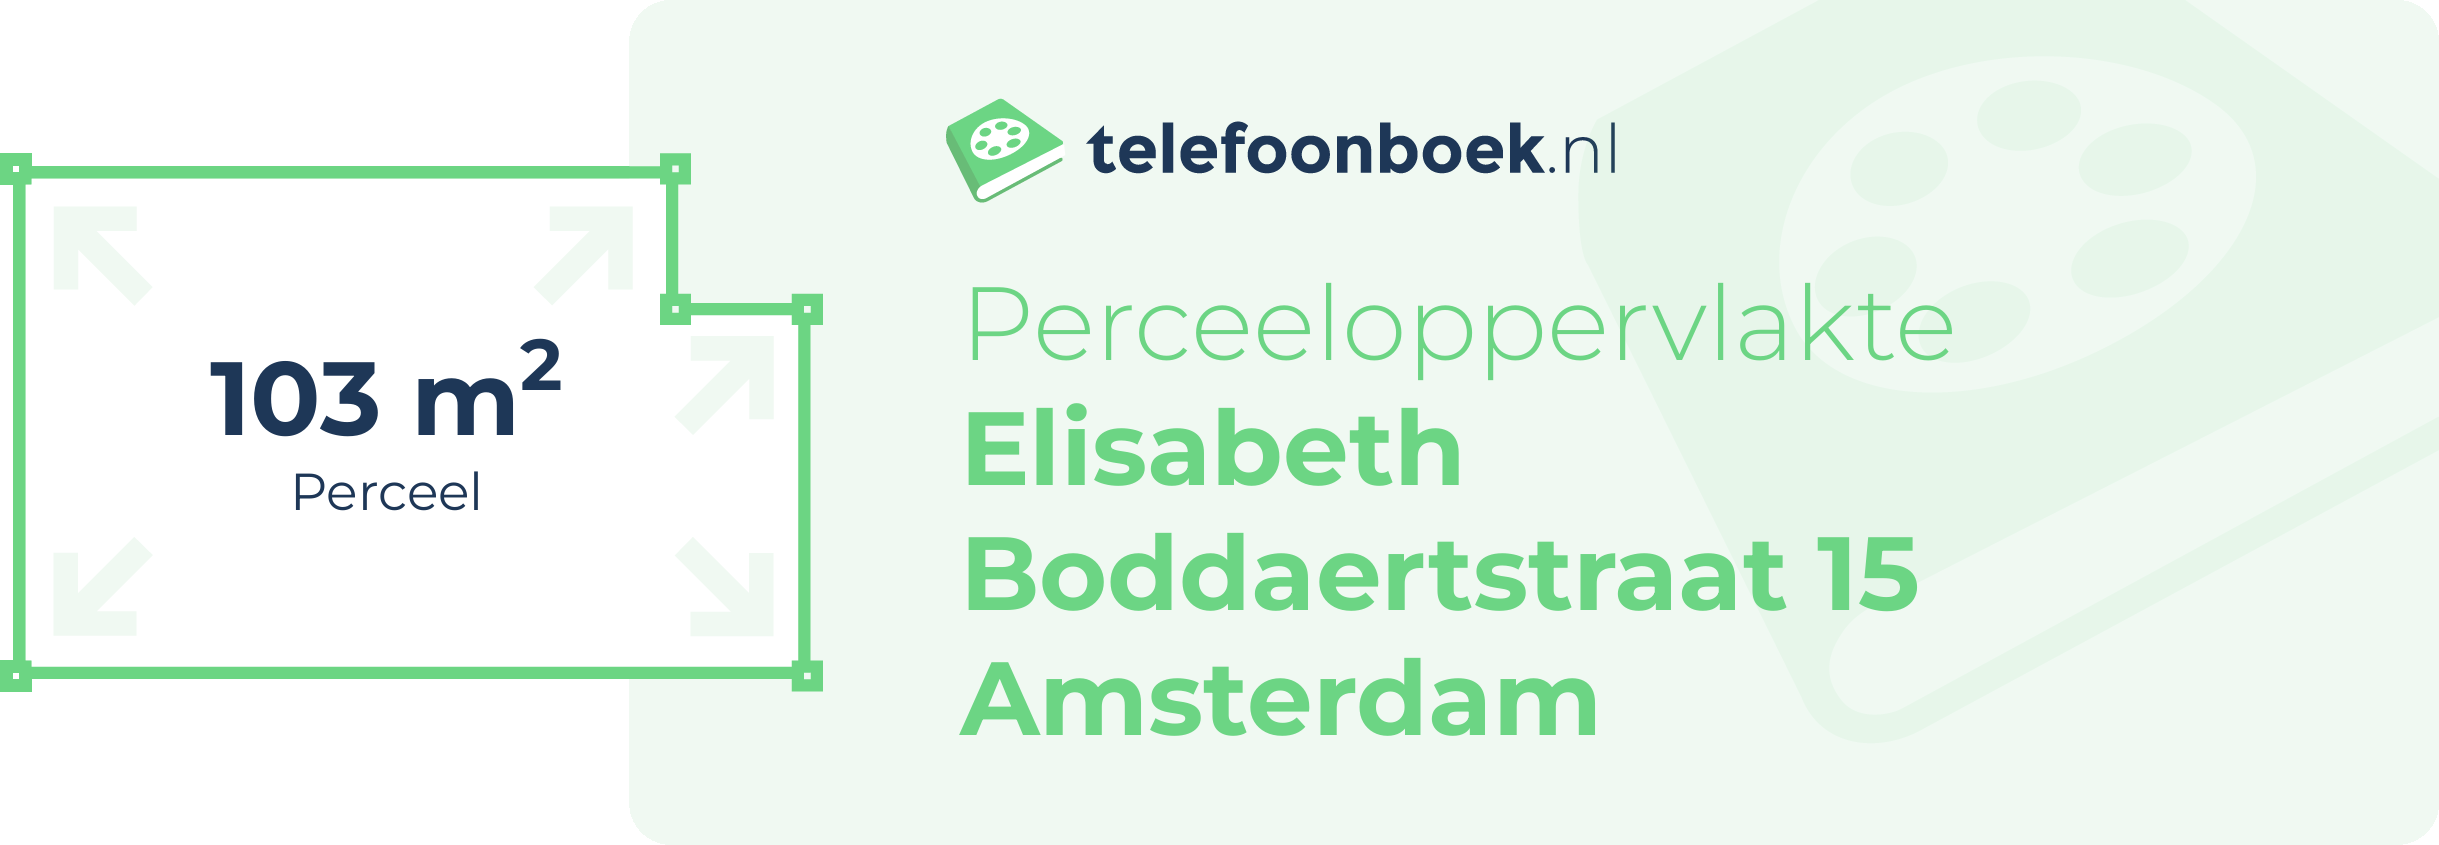 Perceeloppervlakte Elisabeth Boddaertstraat 15 Amsterdam